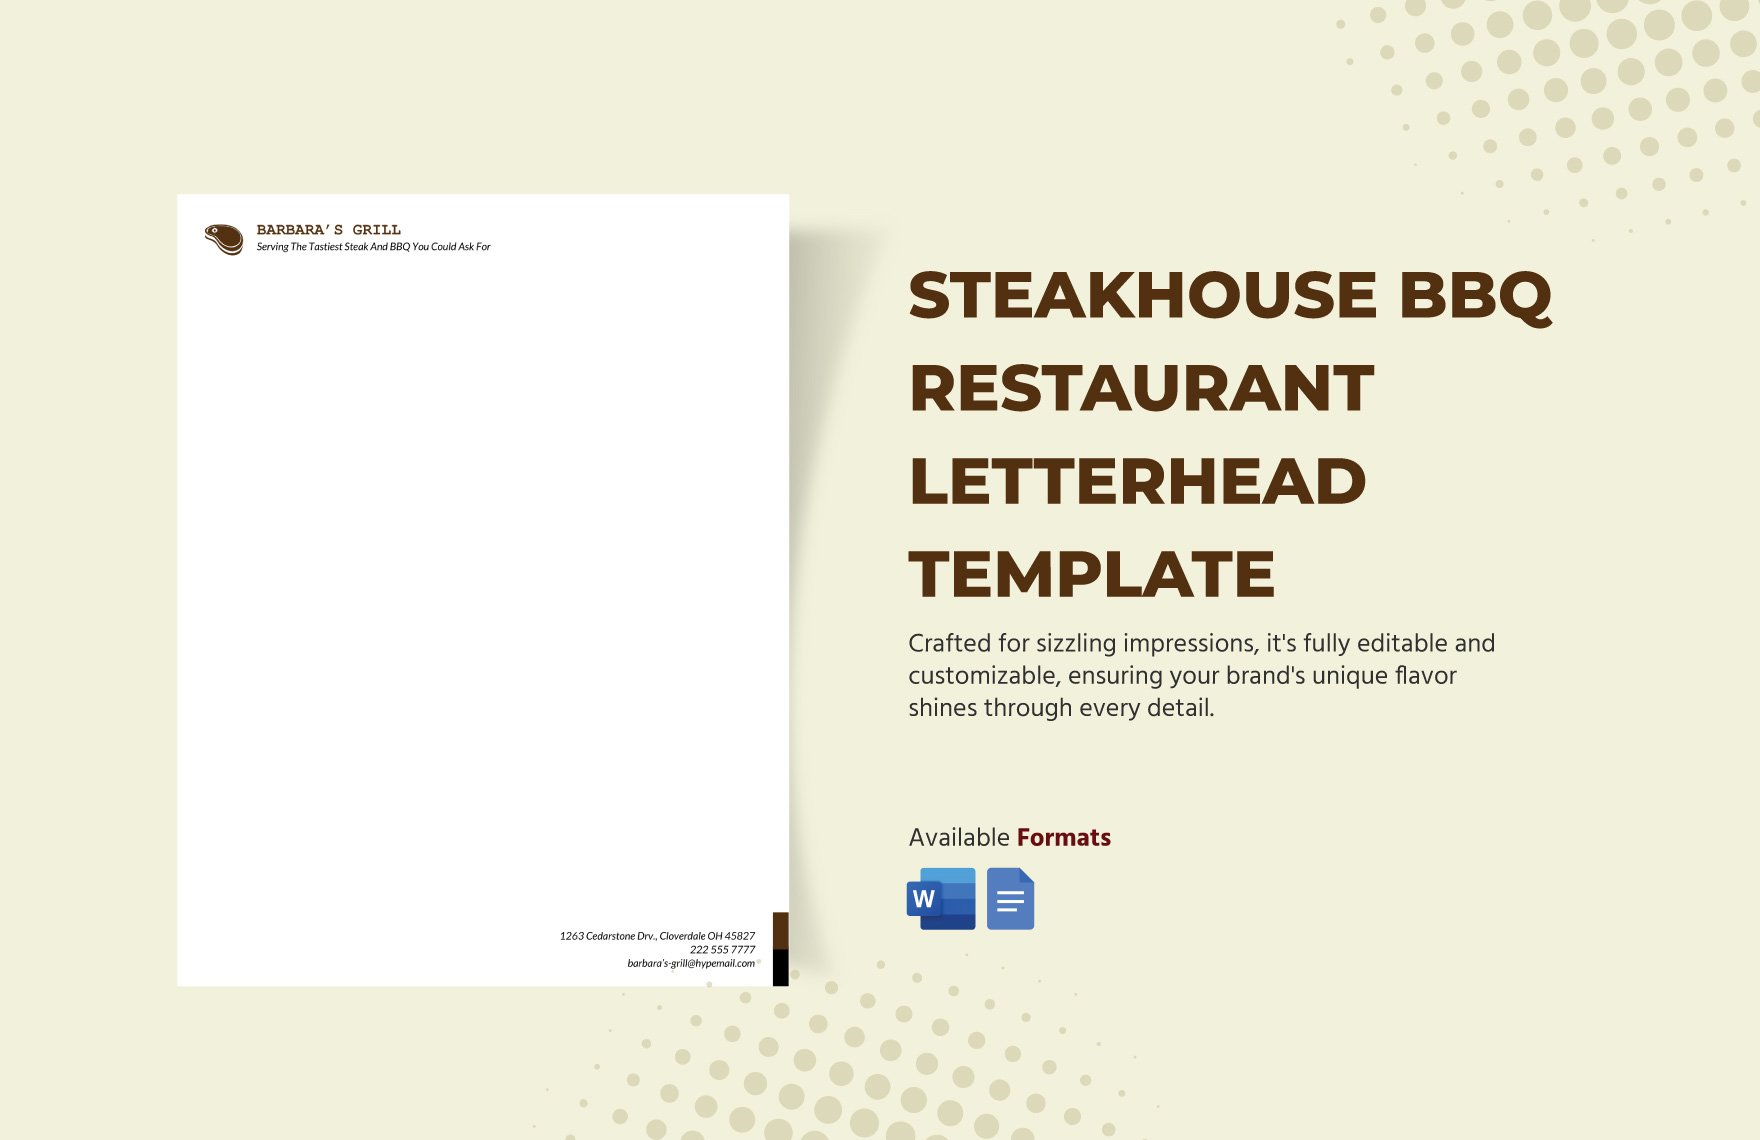 Steakhouse BBQ Restaurant Letterhead Template in Word, Google Docs, PDF